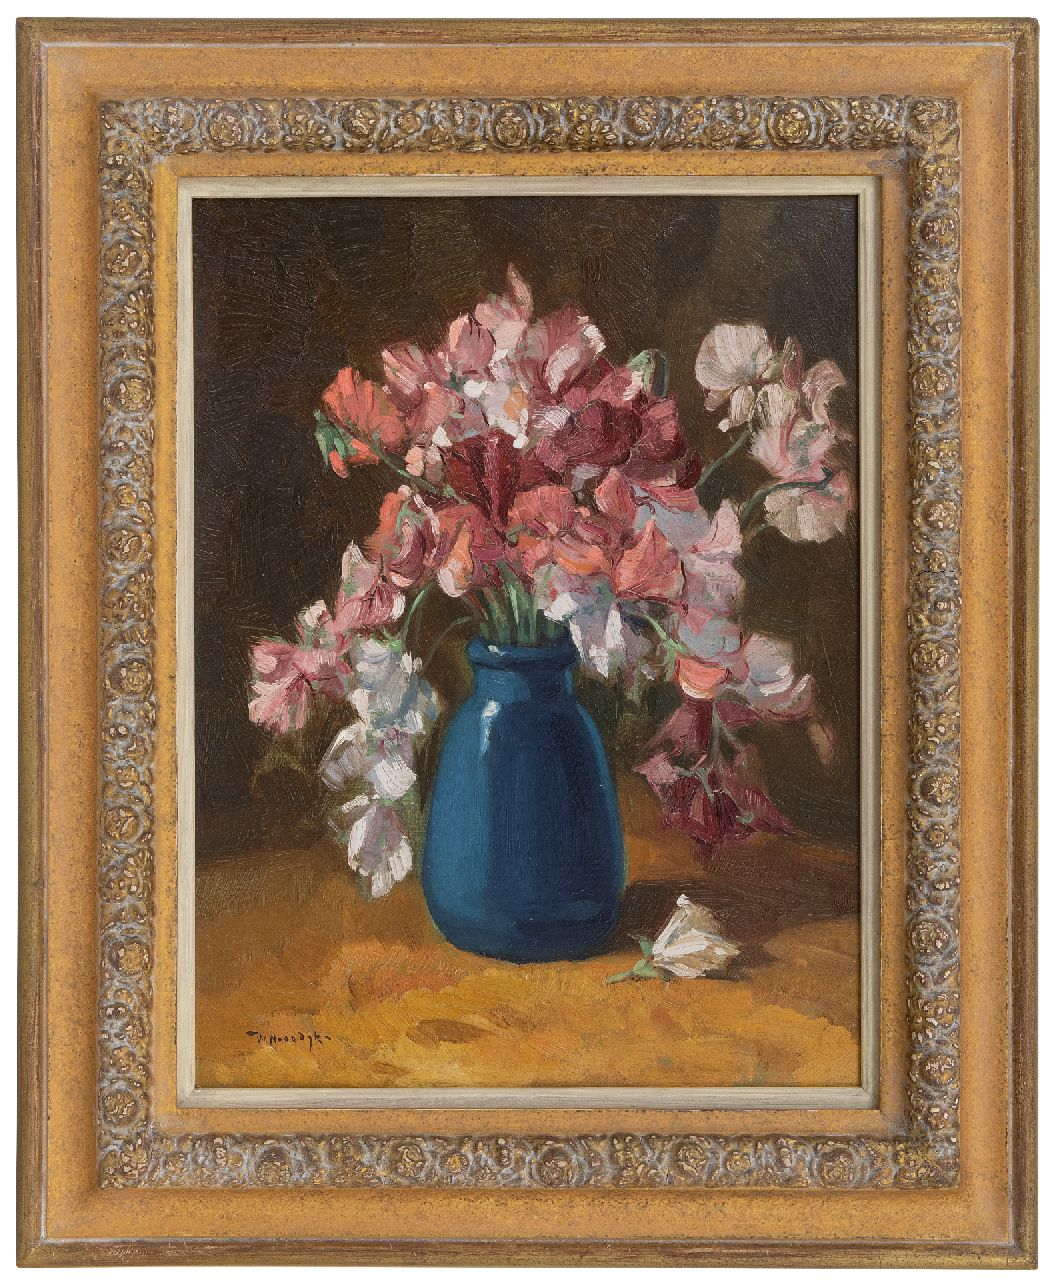 Noordijk W.F.  | 'Willem' Frederik Noordijk, Sweet pea, oil on painter's board 39.9 x 29.8 cm, signed l.l.